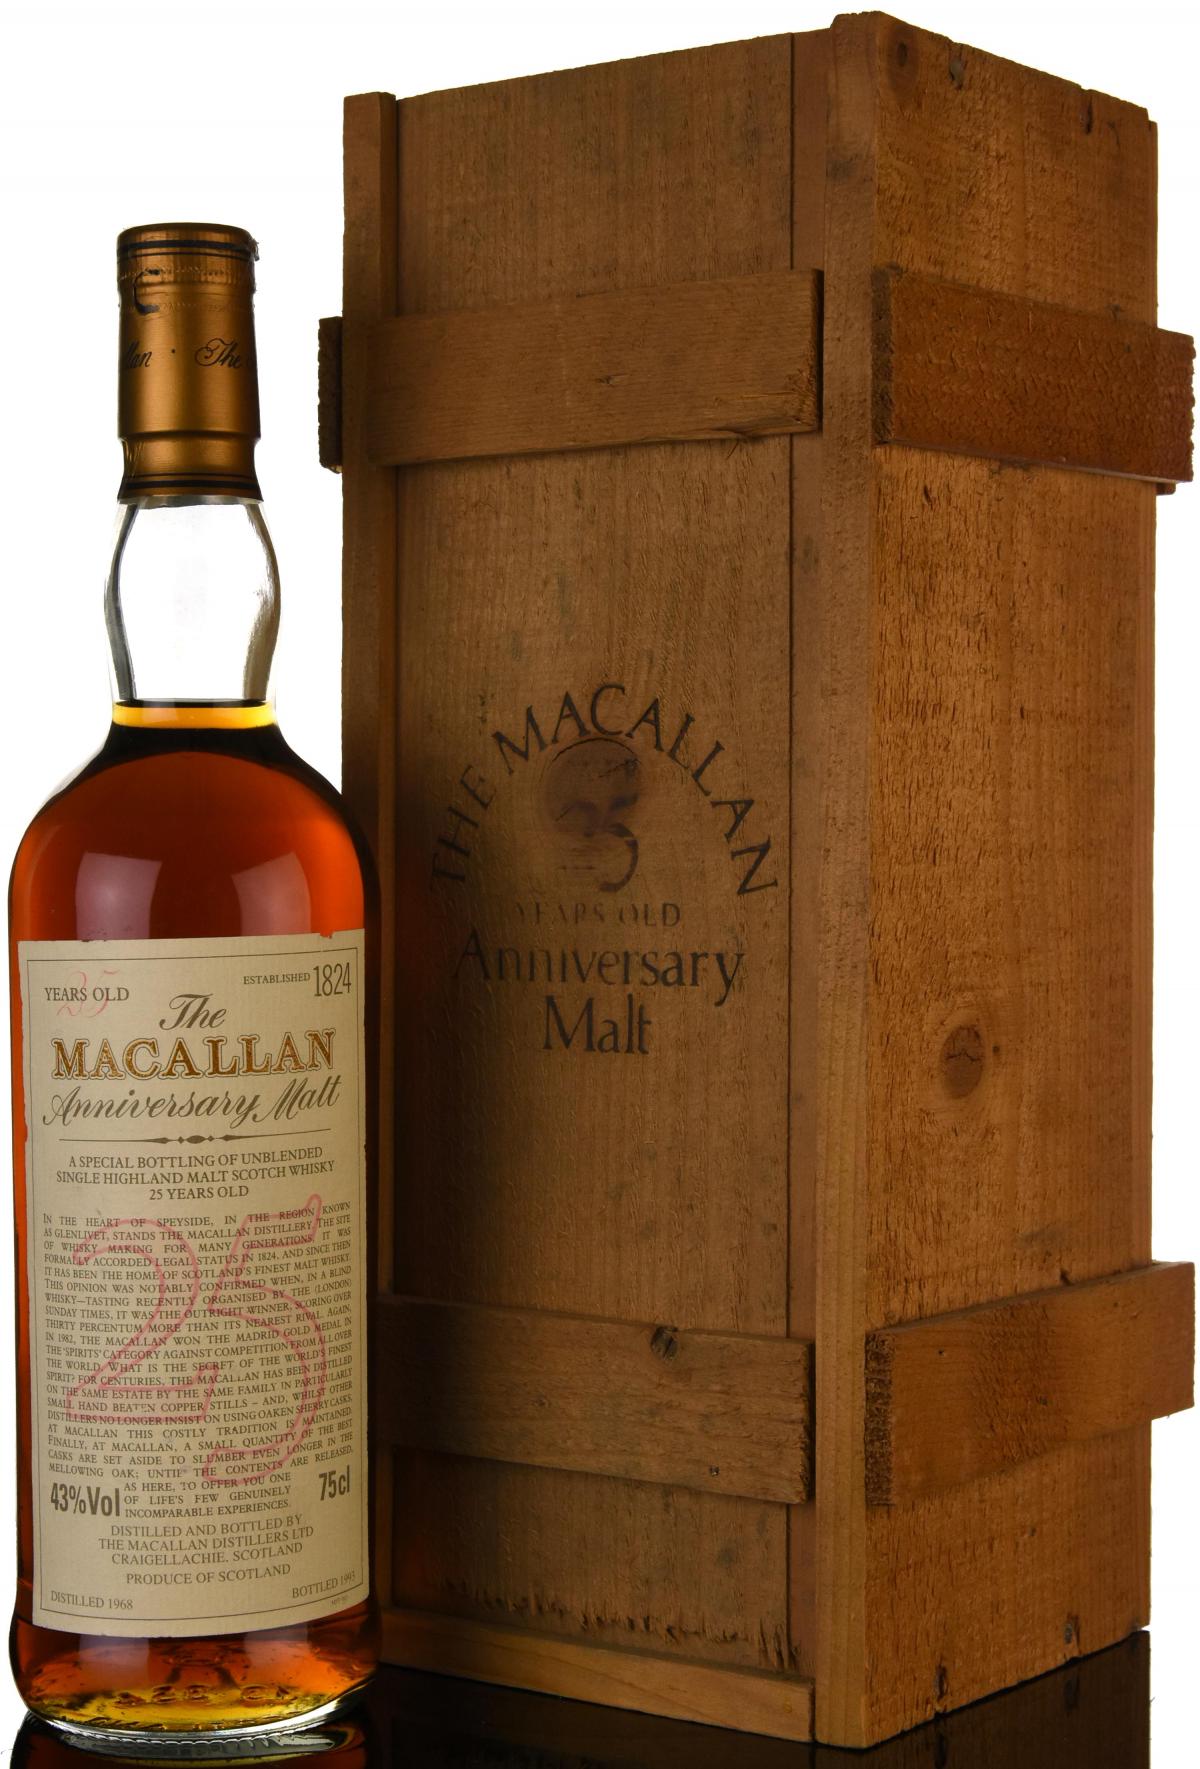 Macallan 1968-1993 - 25 Year Old Anniversary Malt